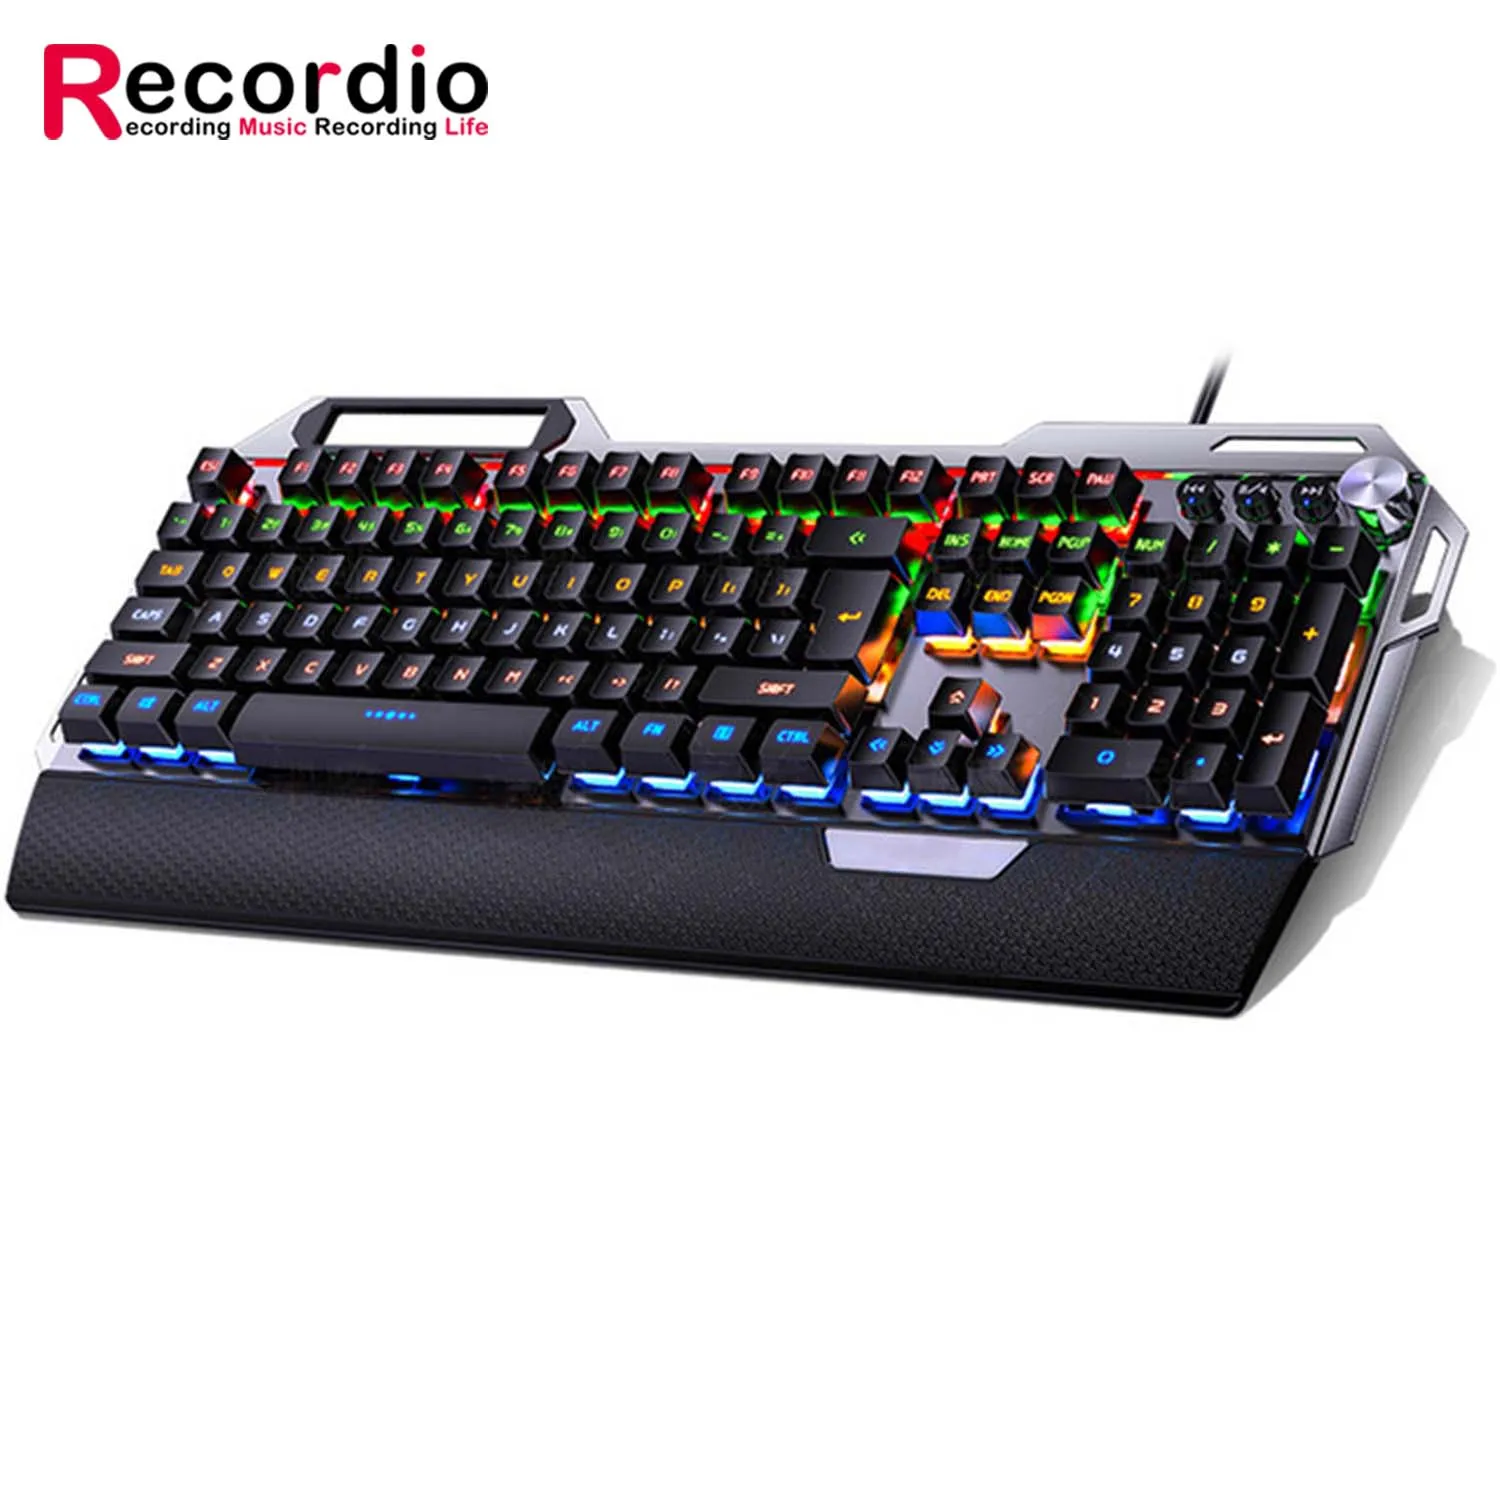 

GAZ-KB02 metal mechanical gaming keyboard with hand rest, mobile phone holder knob adjustment 104-key wired keyboard